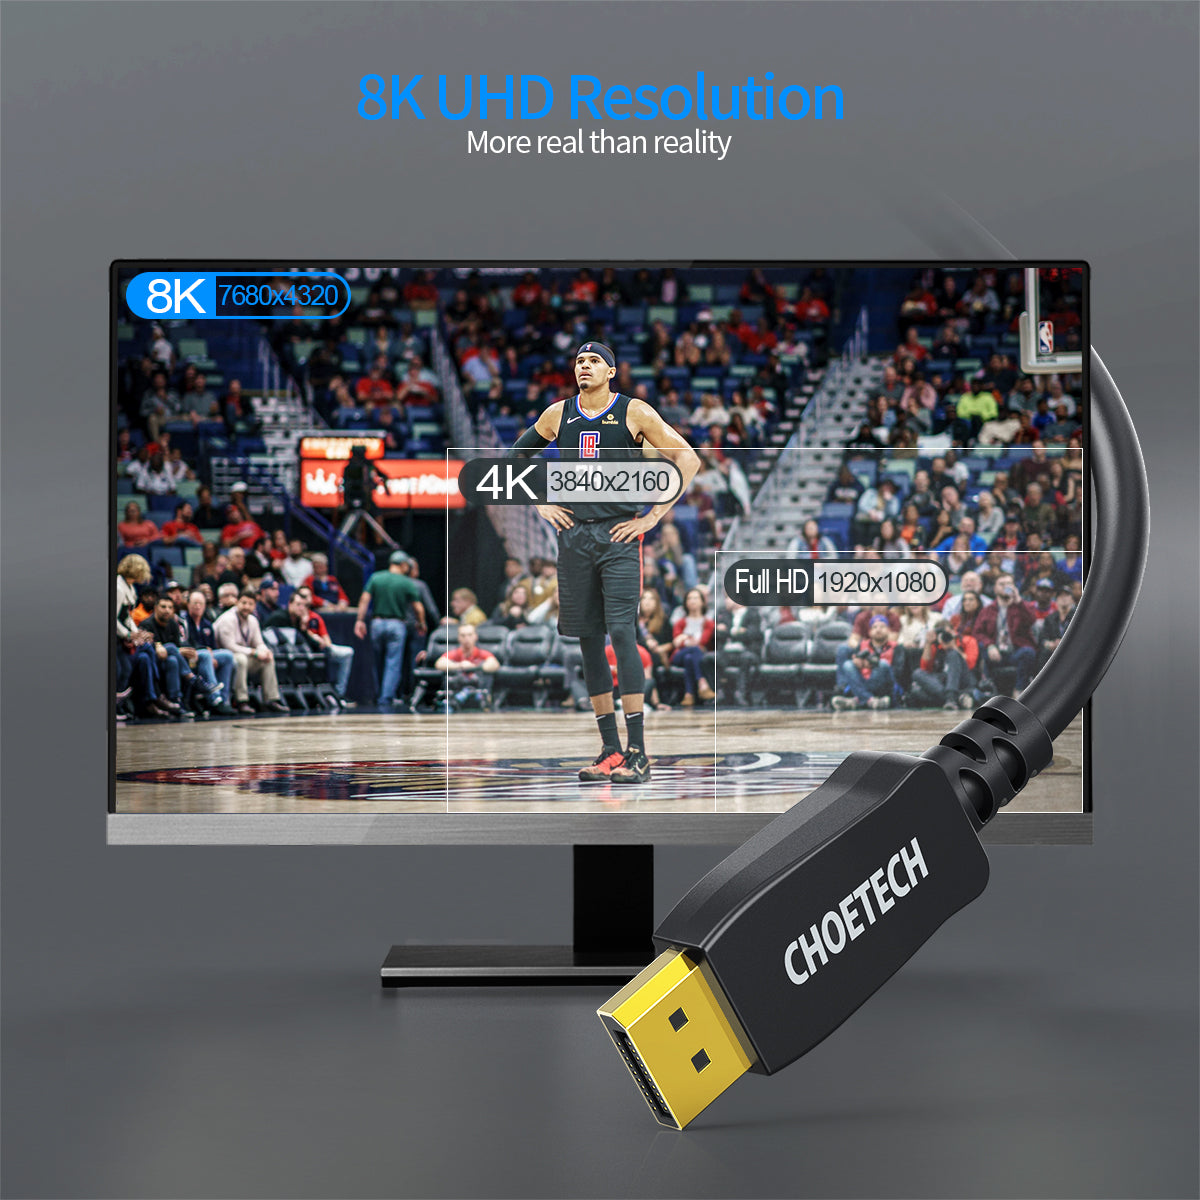 Cable DisplayPort XDD01 CHOETECH 8K, Displayport a Displayport Cable 6.6ft/2M con resolución 8K 60Hz